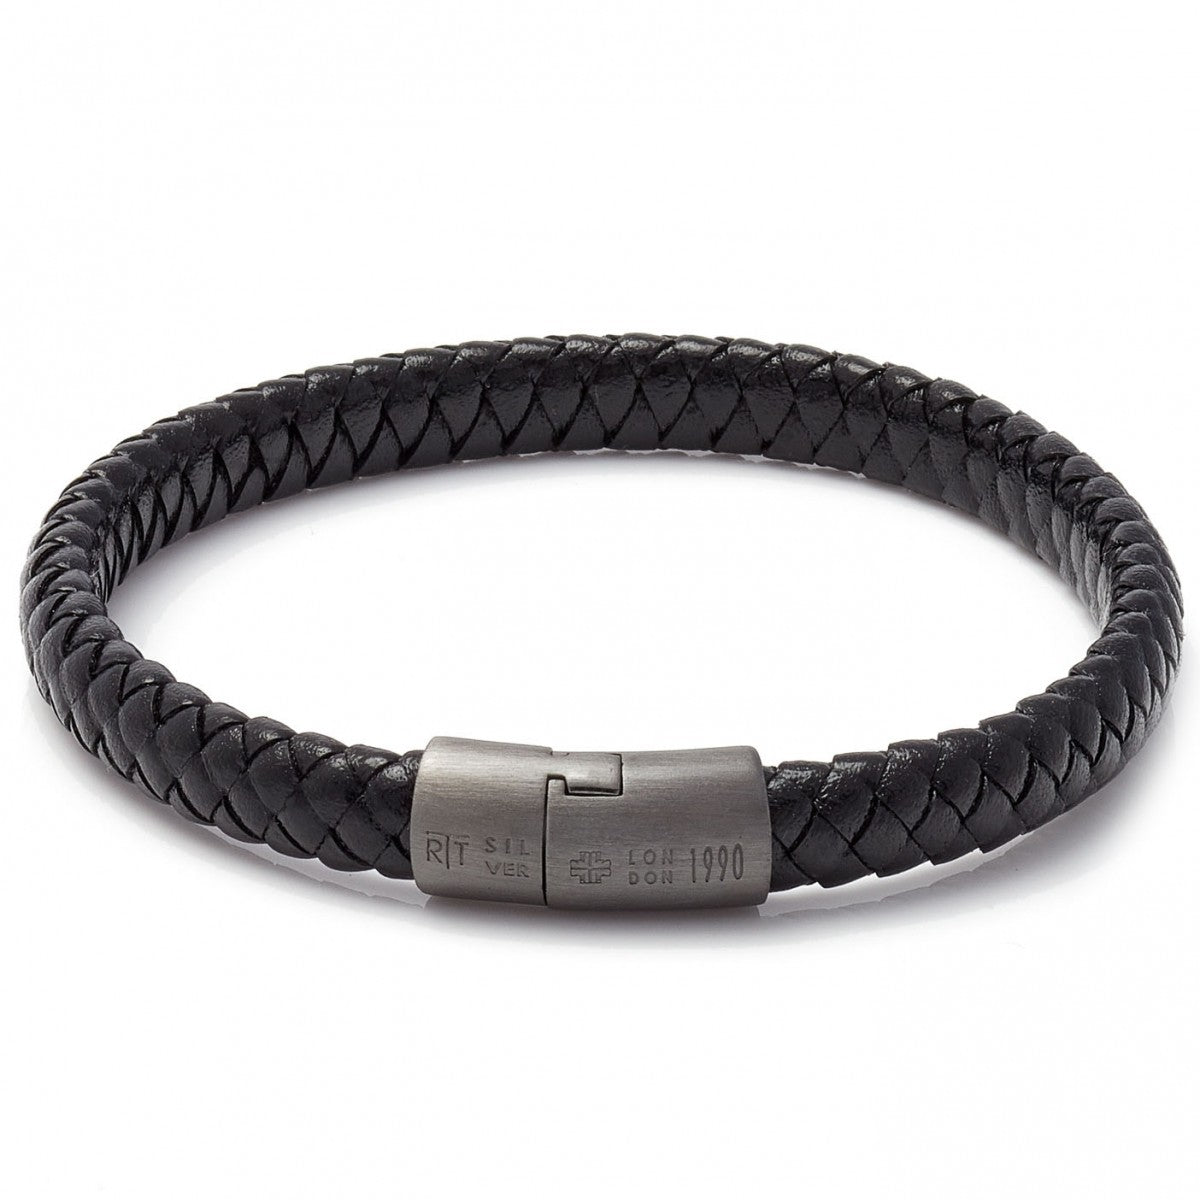 Home › Tateossian Men's Cobra Sontuoso Wide Leather Bracelet, Black